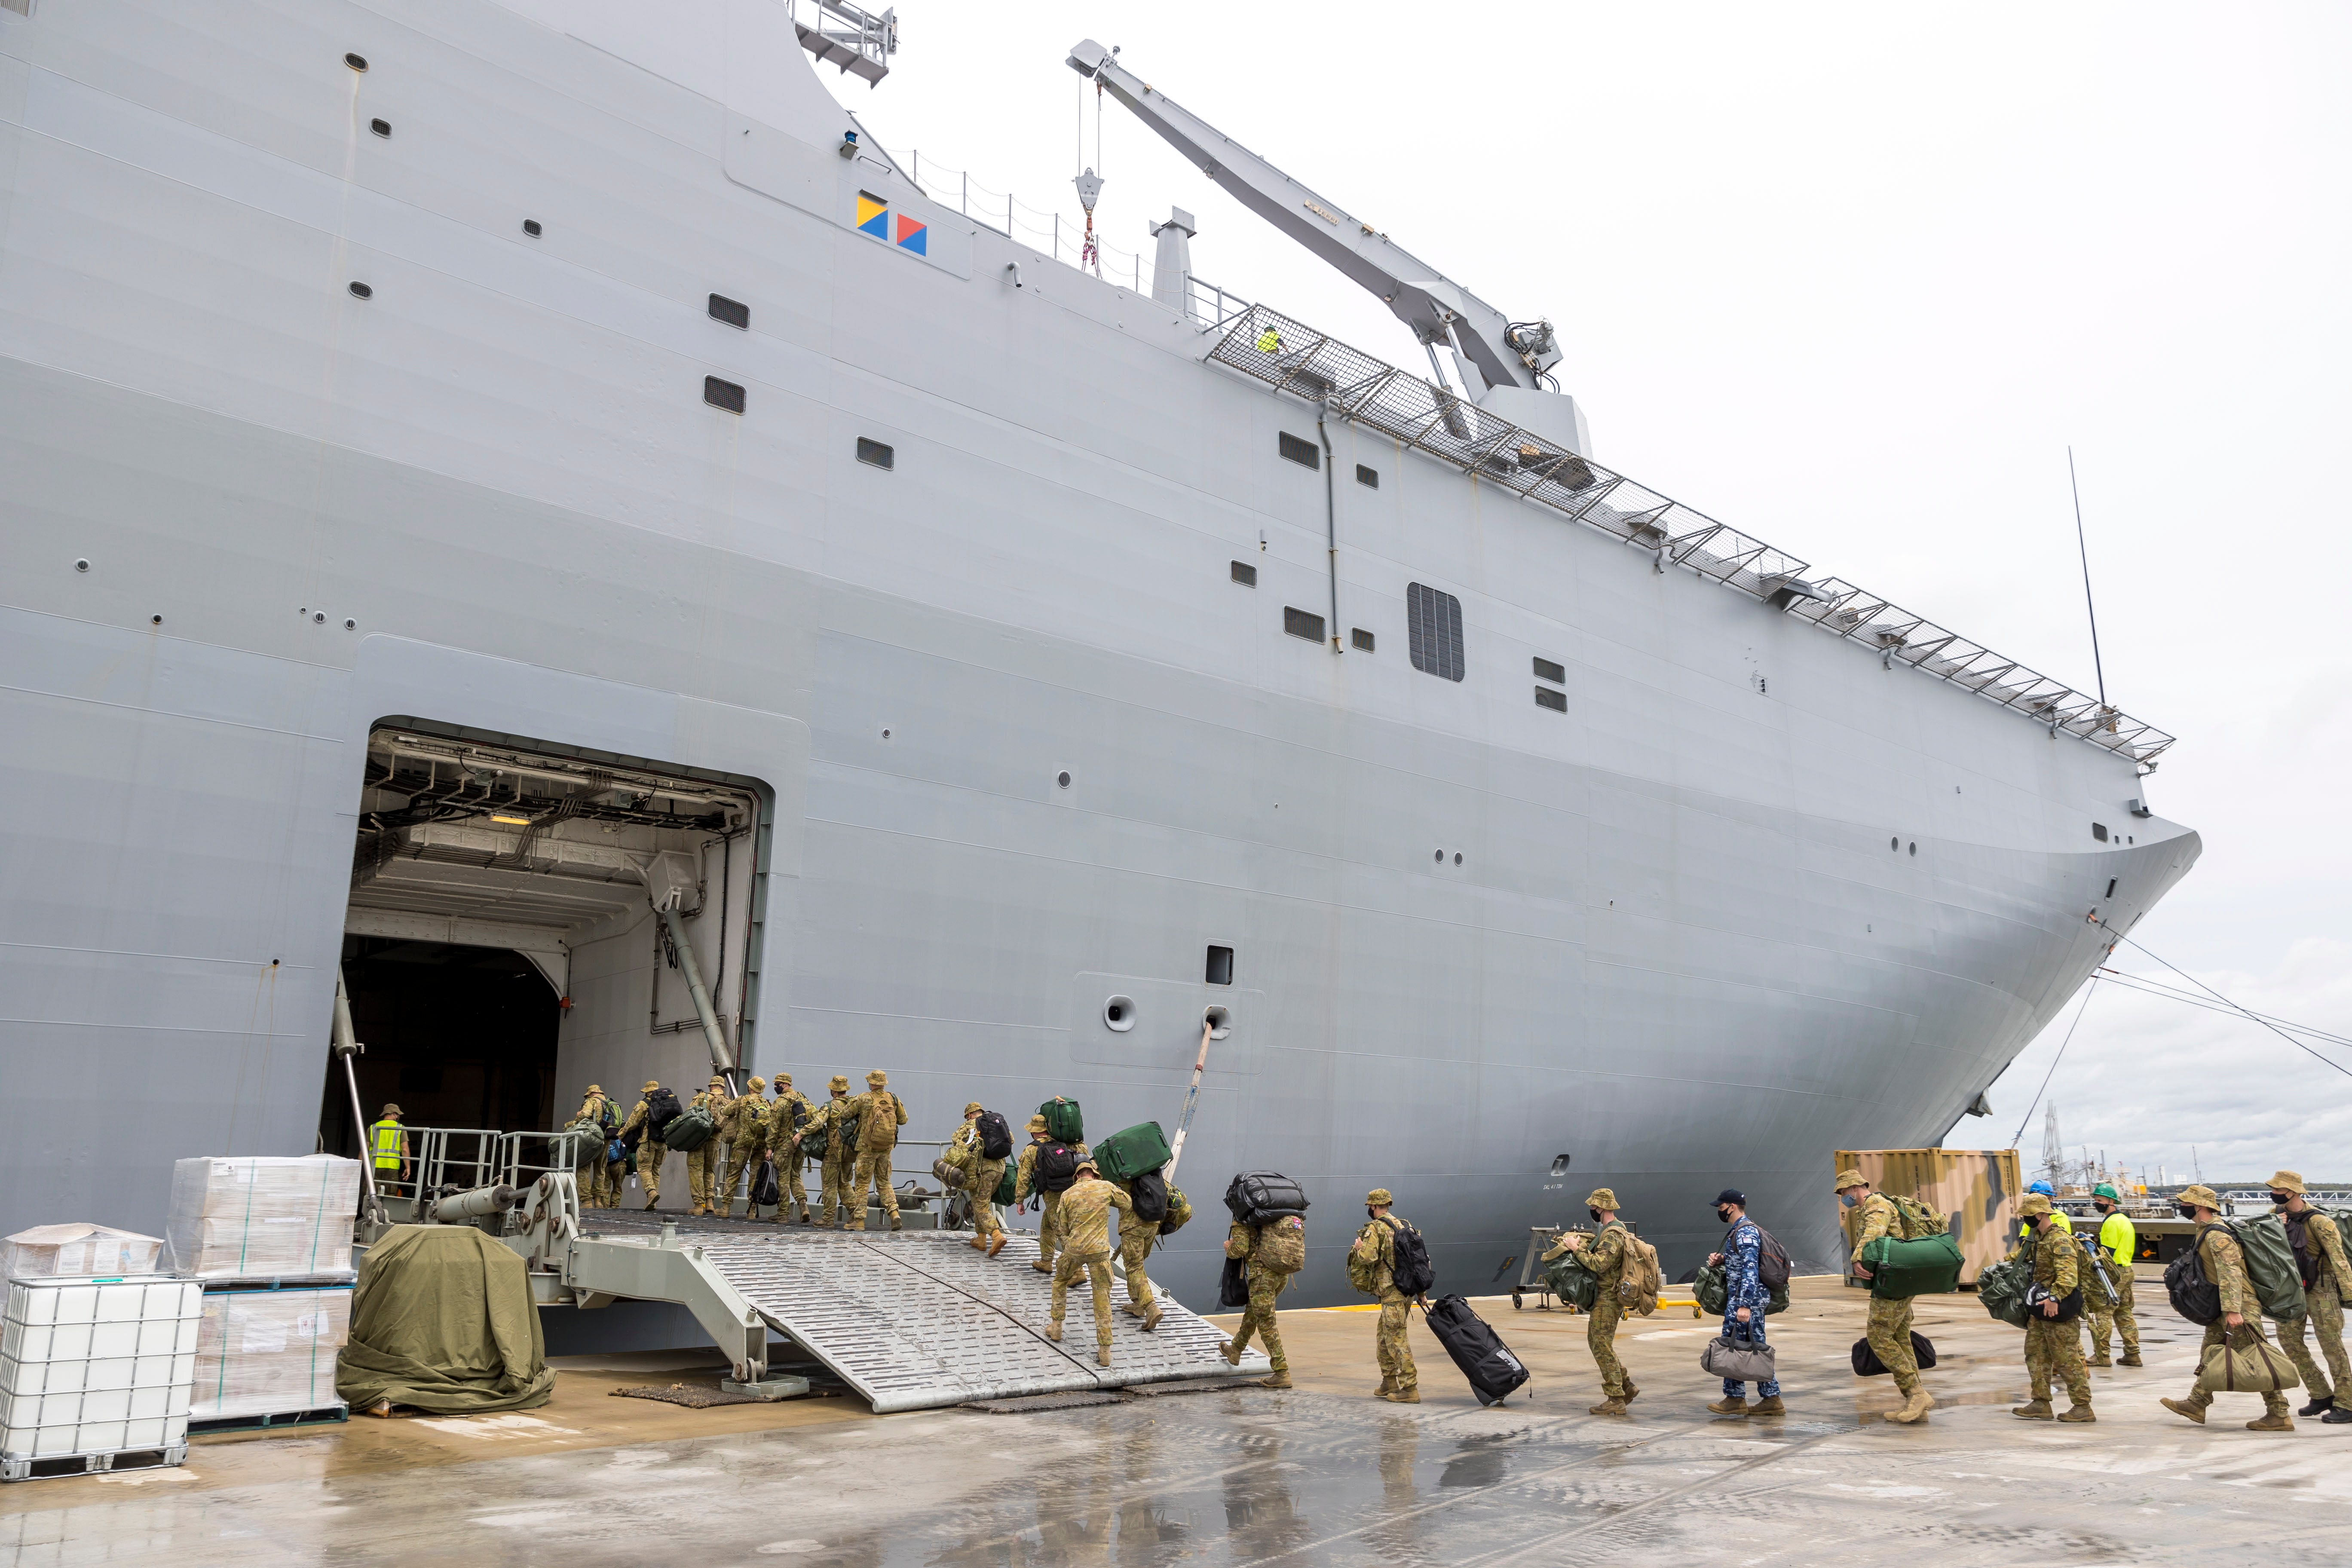 Royal Australian Navy HMAS Adelaide ship heading to Tonga to provide emergency disaster relief